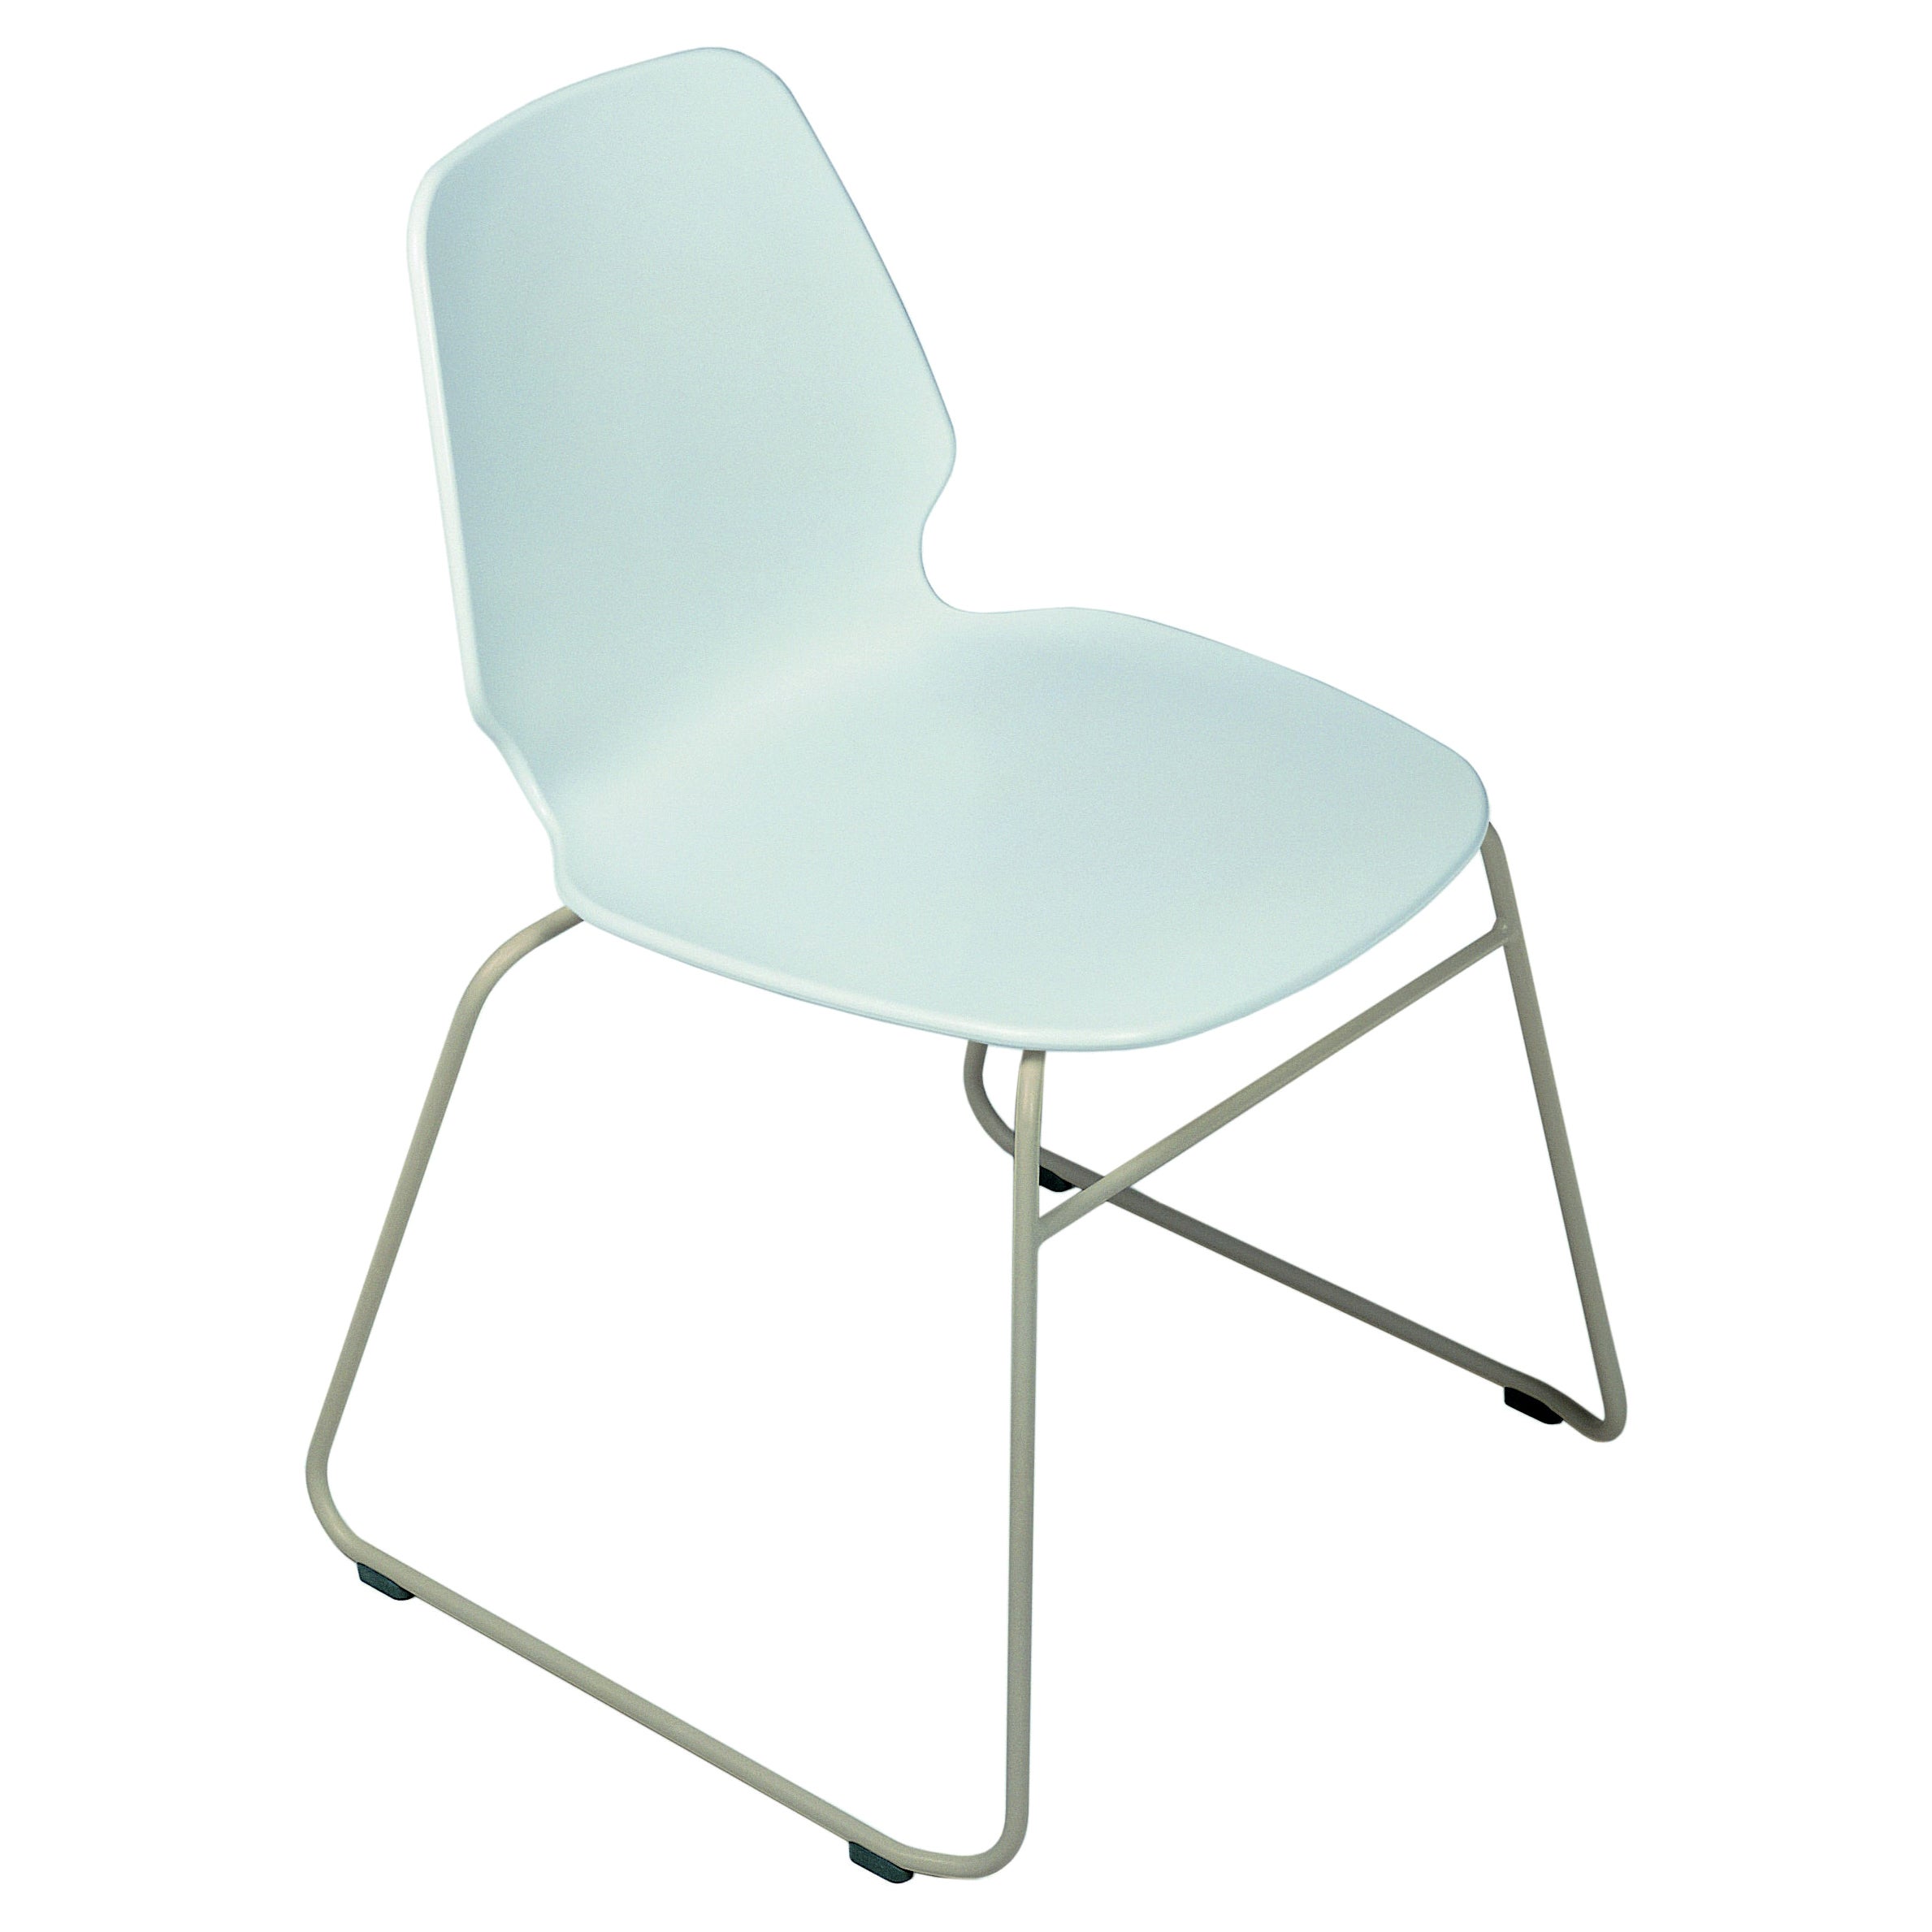 Alias 531 Selinunte Sledge Chair in White Seat and Sand Lacquered Steel Frame (Chaise luge Alias 531 Selinunte avec assise blanche et structure en acier laqué sable)